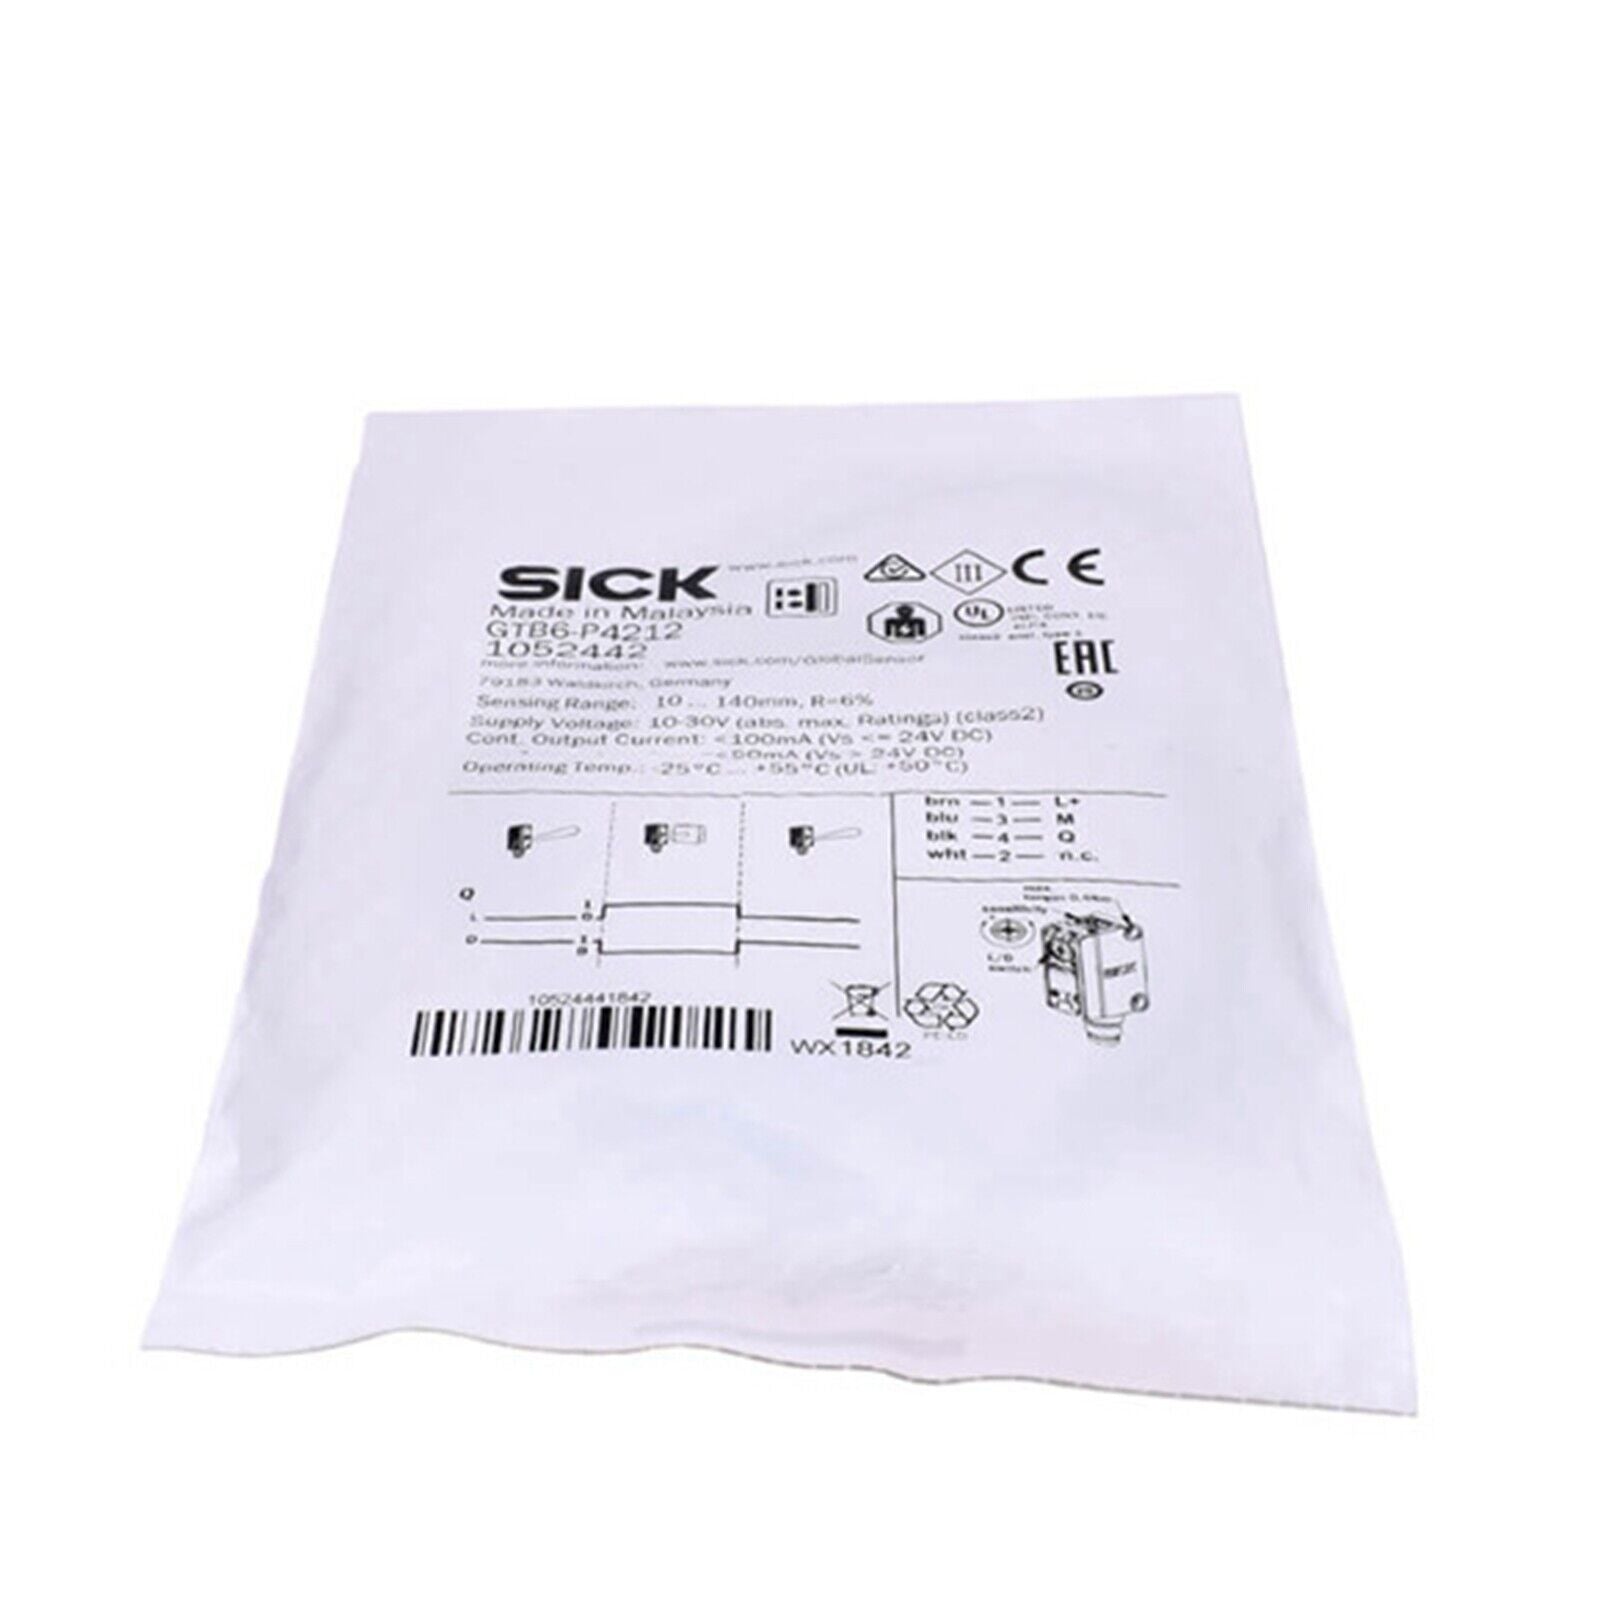 Sick GTB6-P4212 Photoelectric Switch